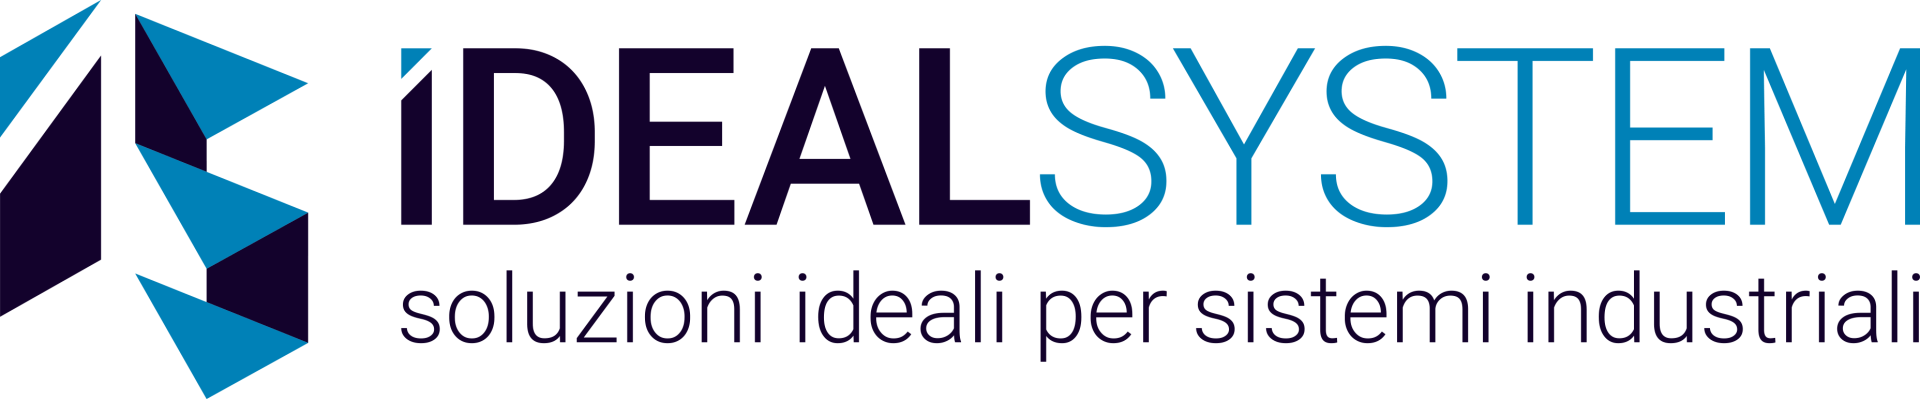 Idealsystem Cesena - Celle frigorifere industriali